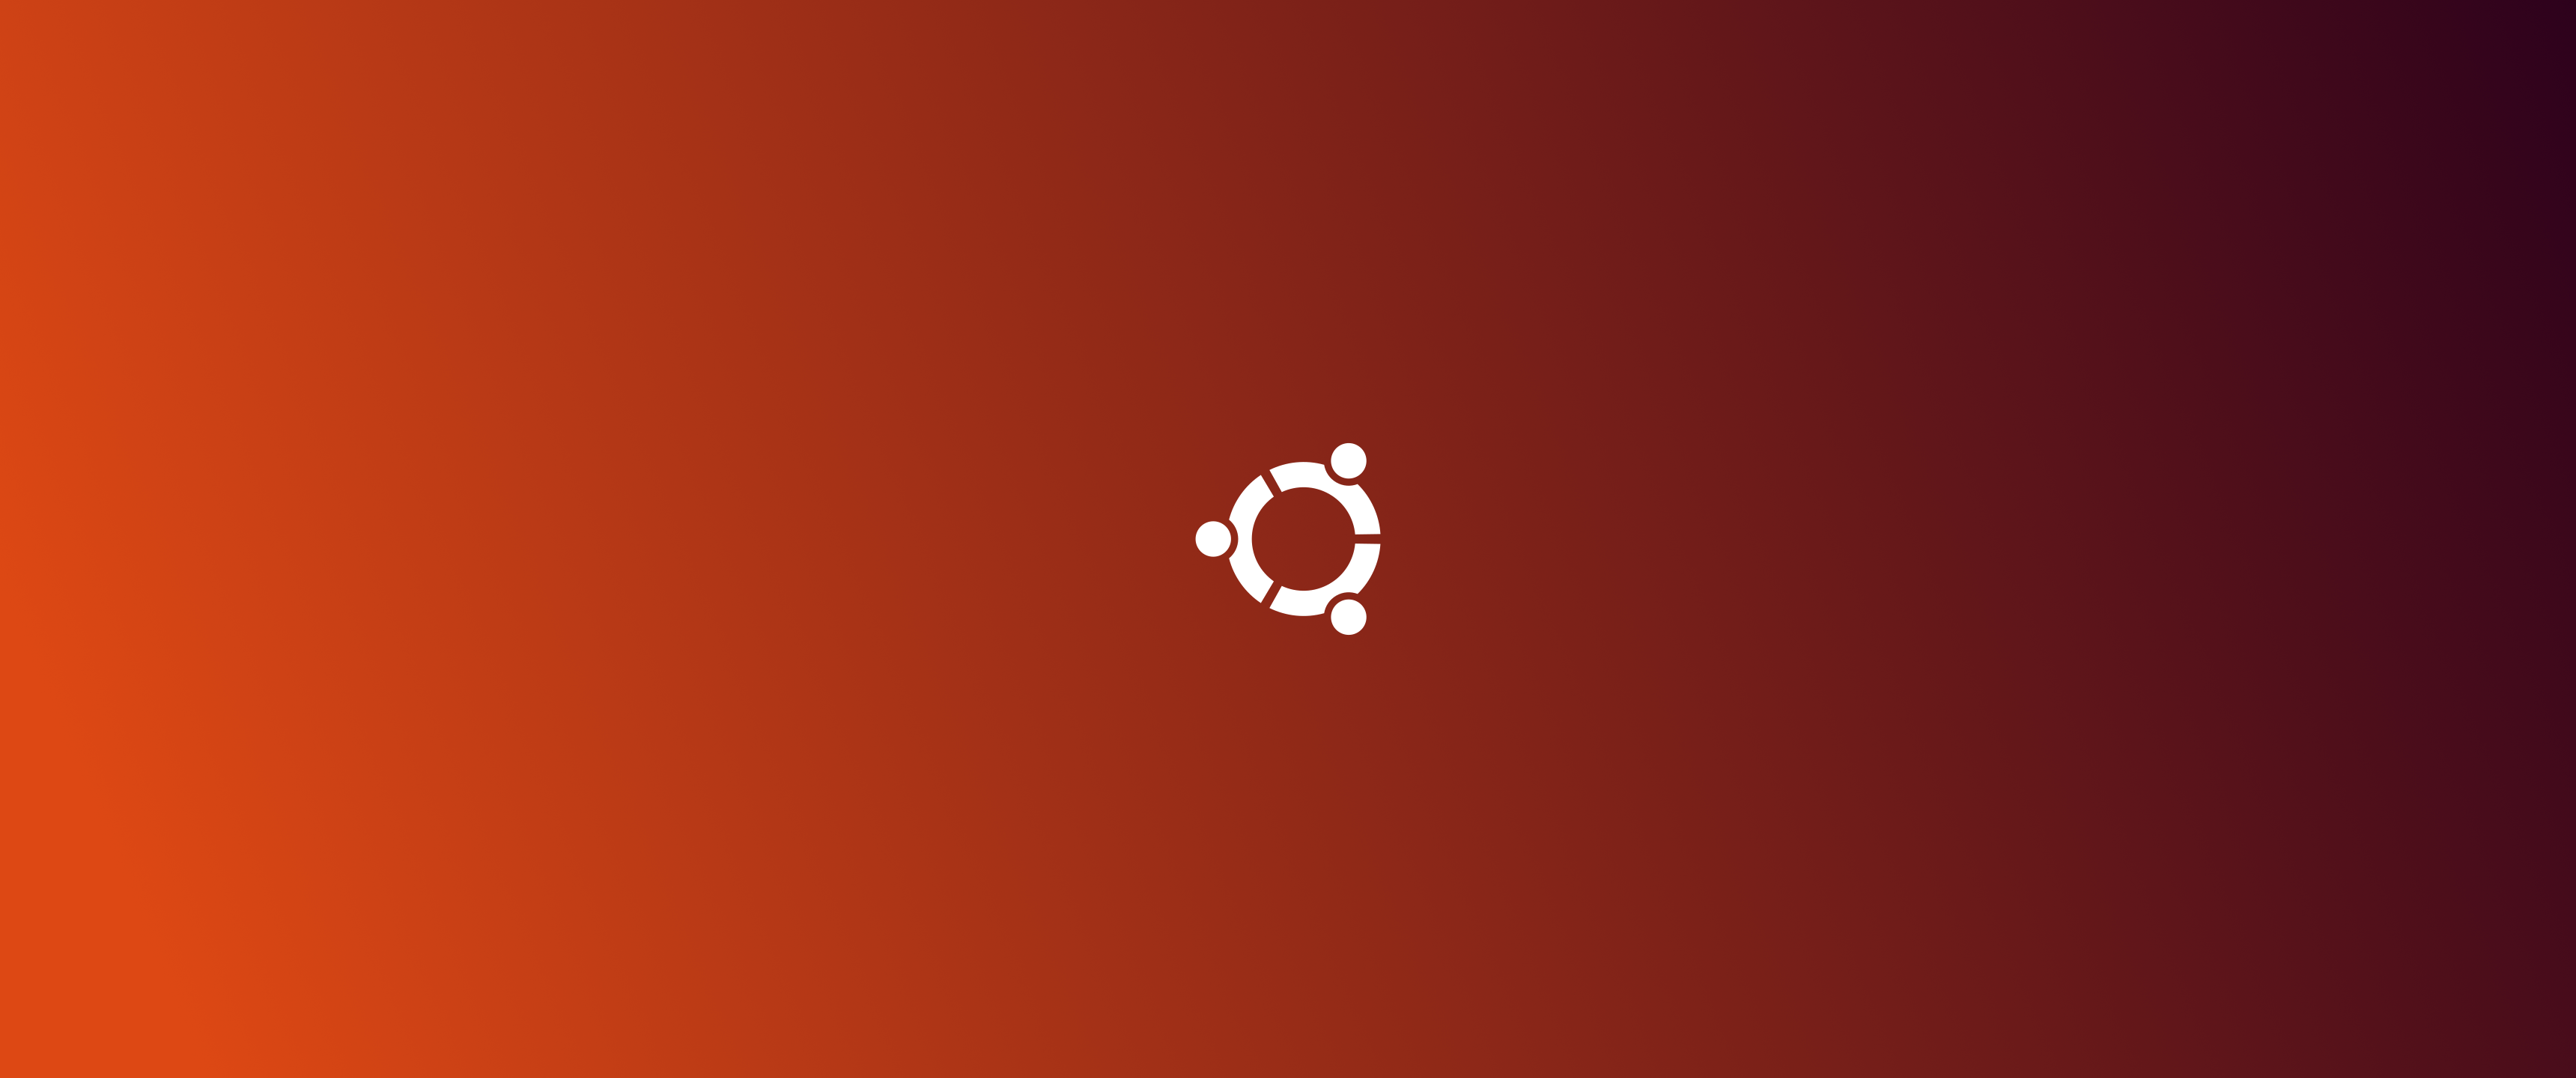 Linux Minimalism Gradient Ubuntu Simple Background Logo 3440x1440